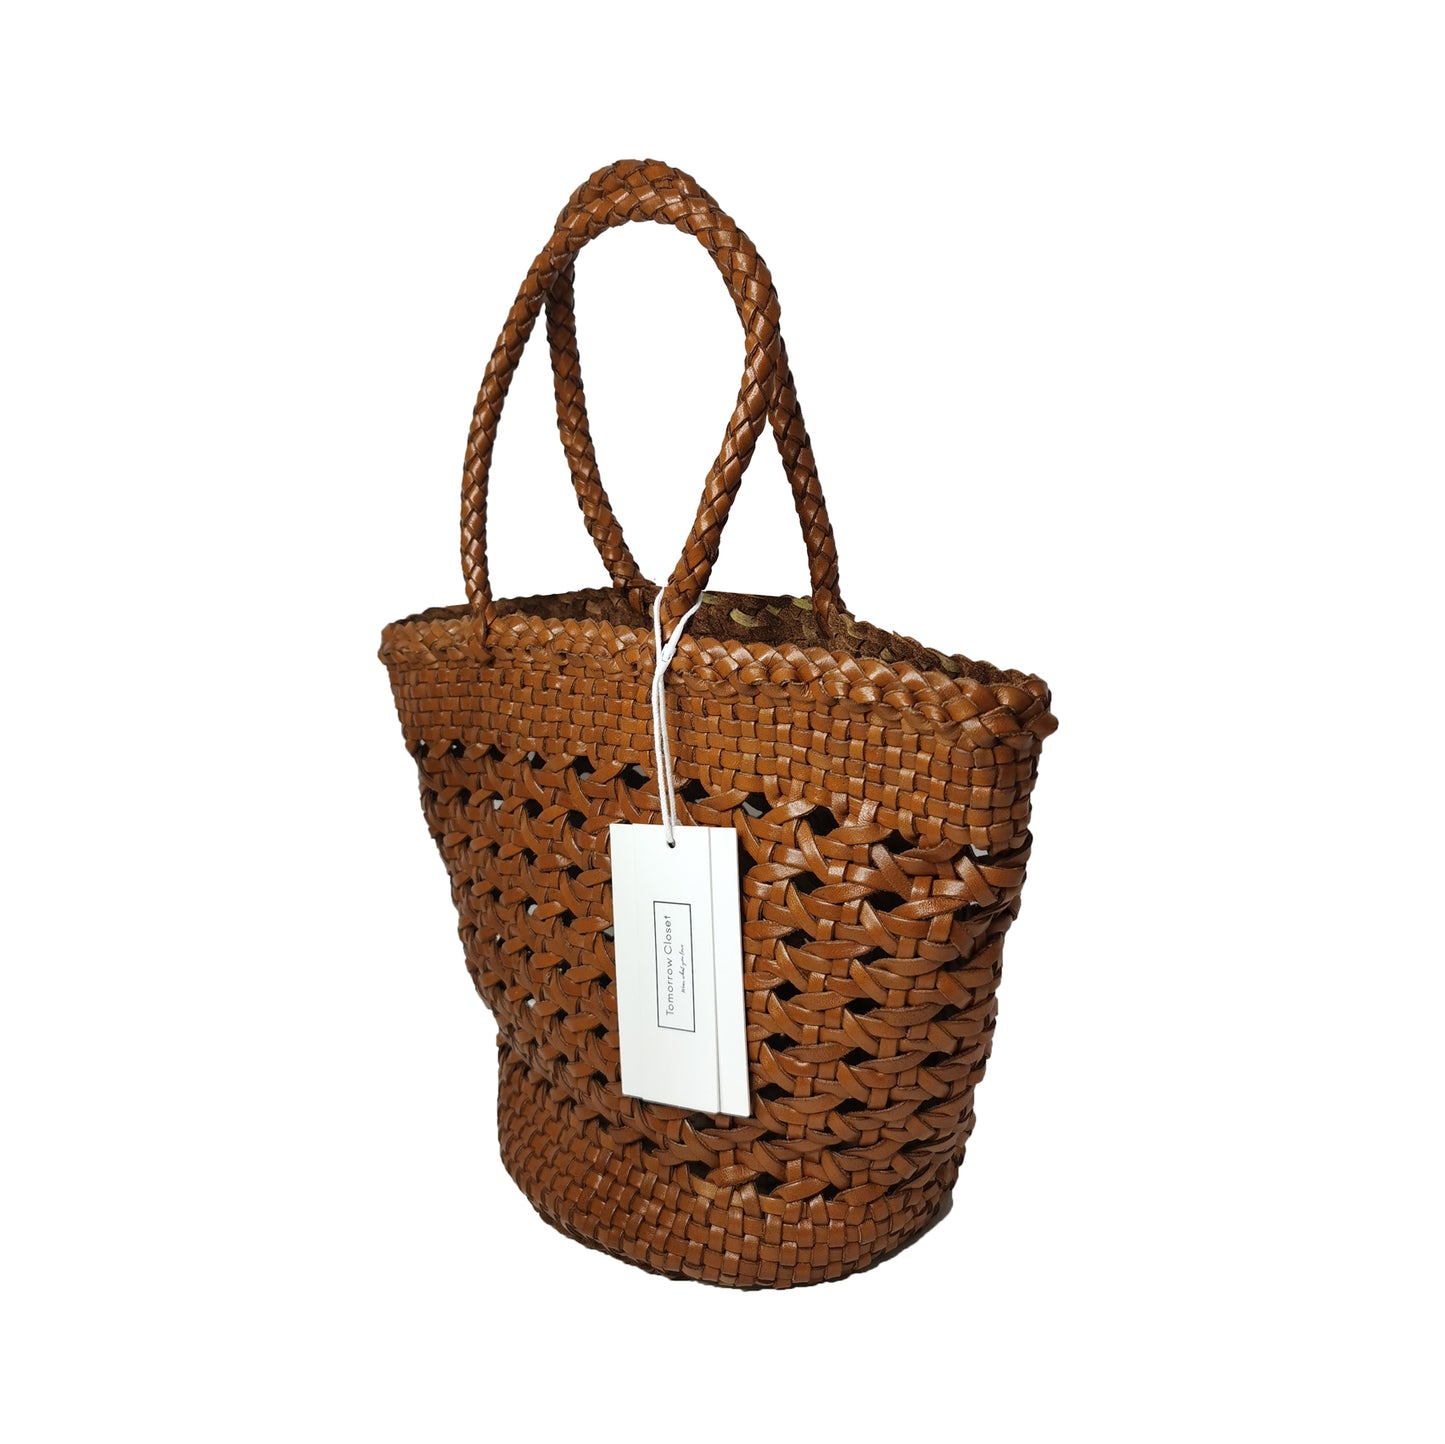 Women's genuine cowhide leather handbag Woven Basket V2 design